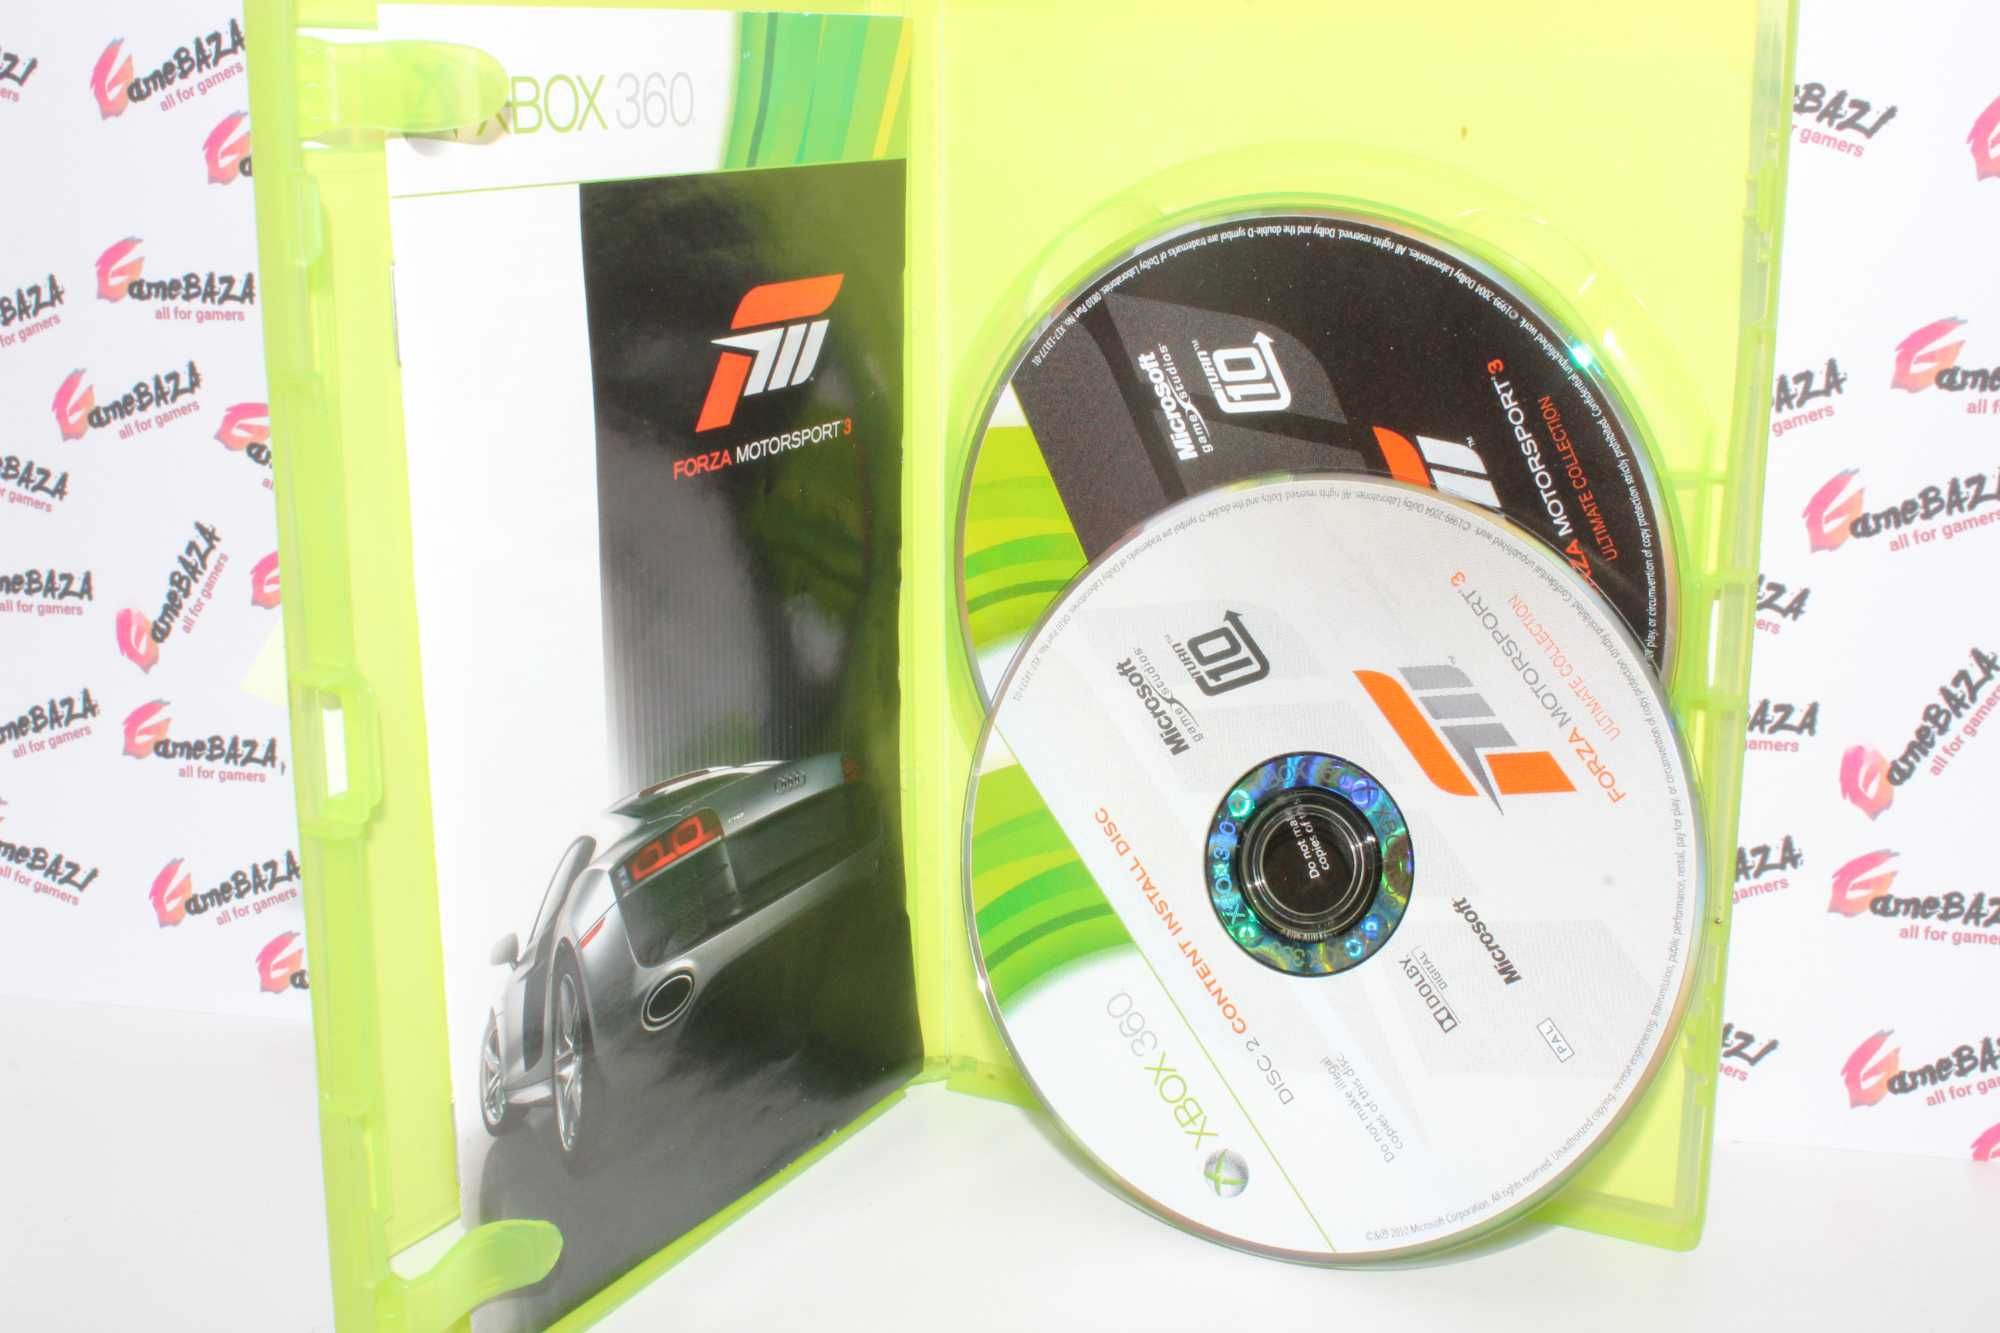 => PLForza Motorsports 3 ultimate Xbox 360 GameBAZA